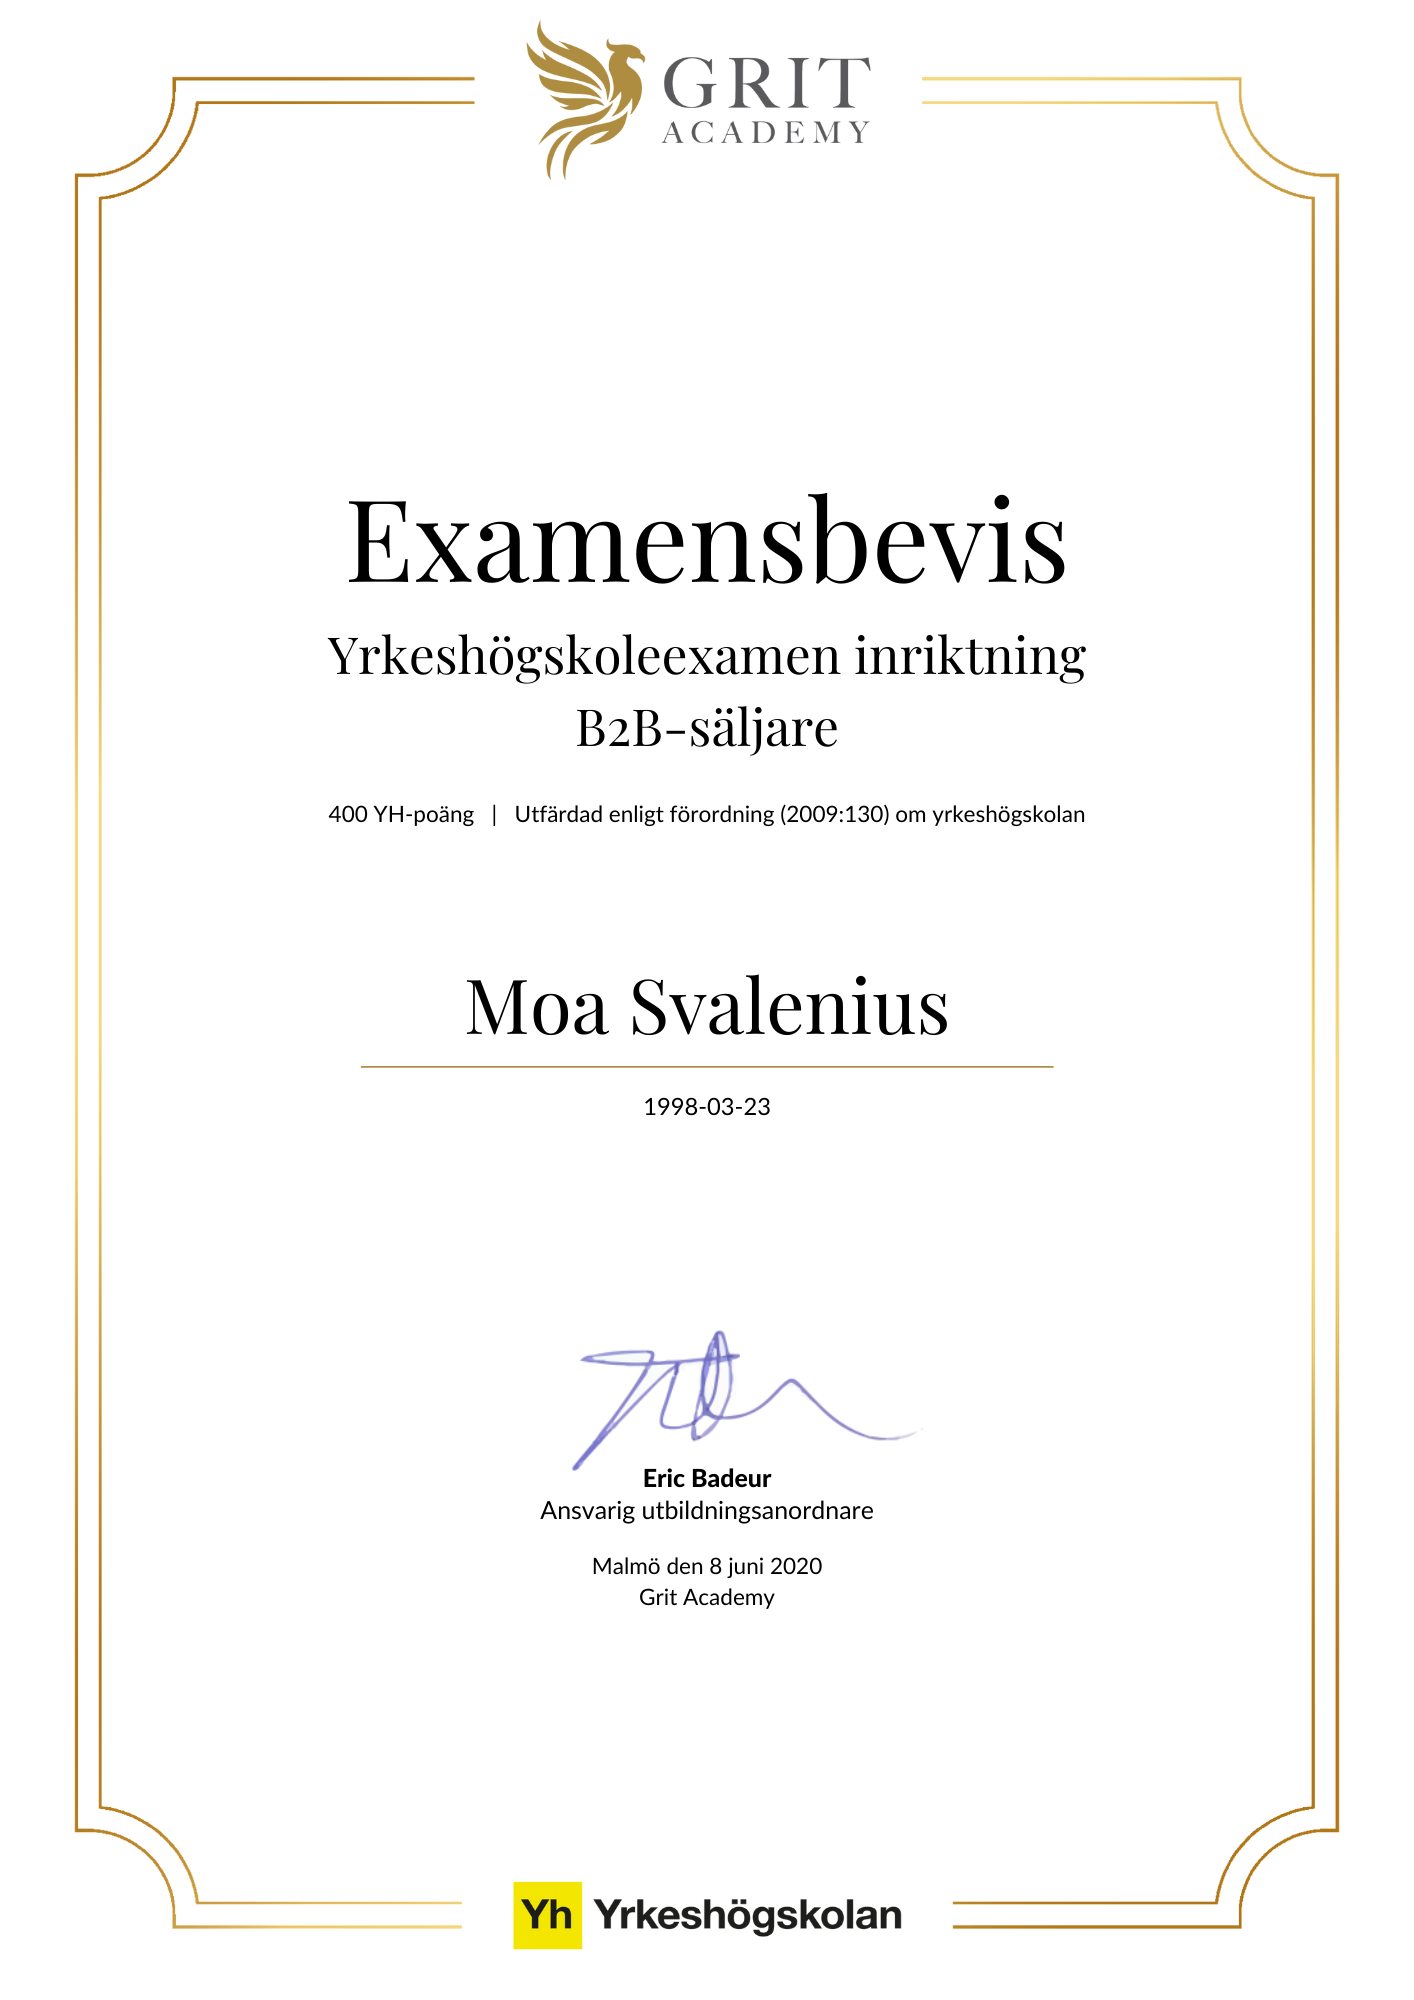 Examensbevis Moa Svalenius - 1